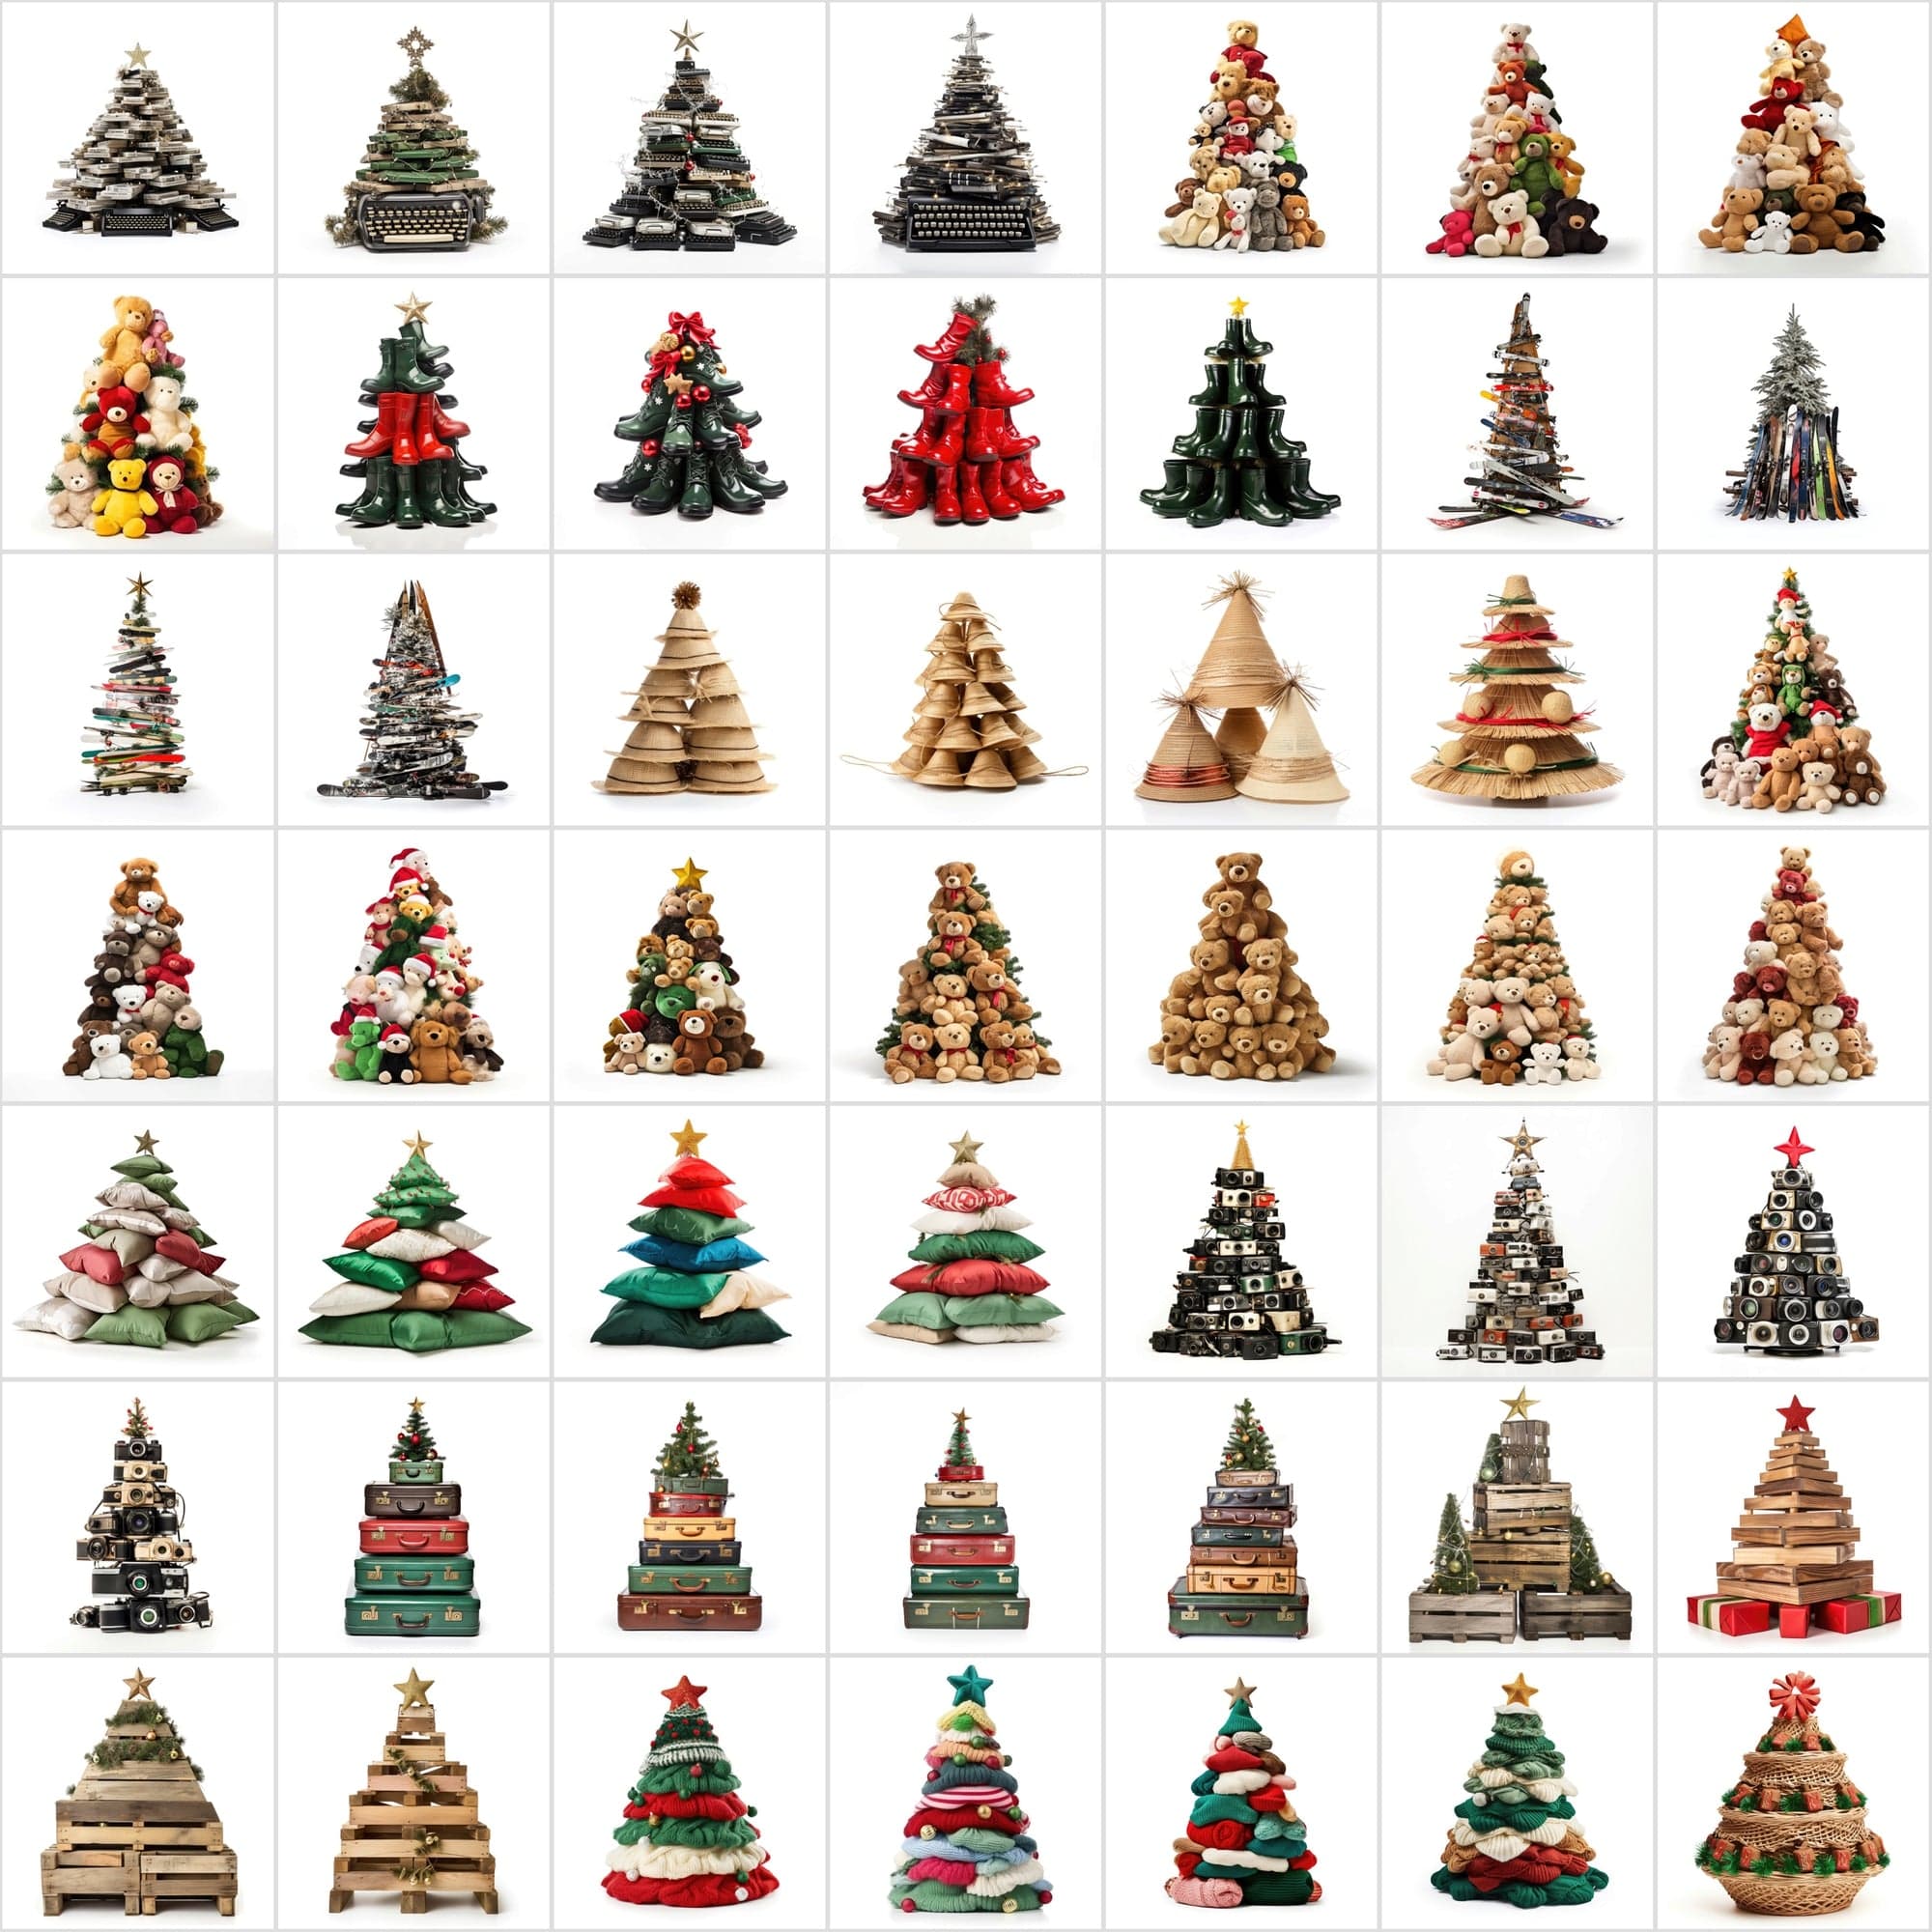 590 Unique Conceptual Christmas Tree Images Collection - High-Resolution Digital Art, Instant Download Digital Download Sumobundle